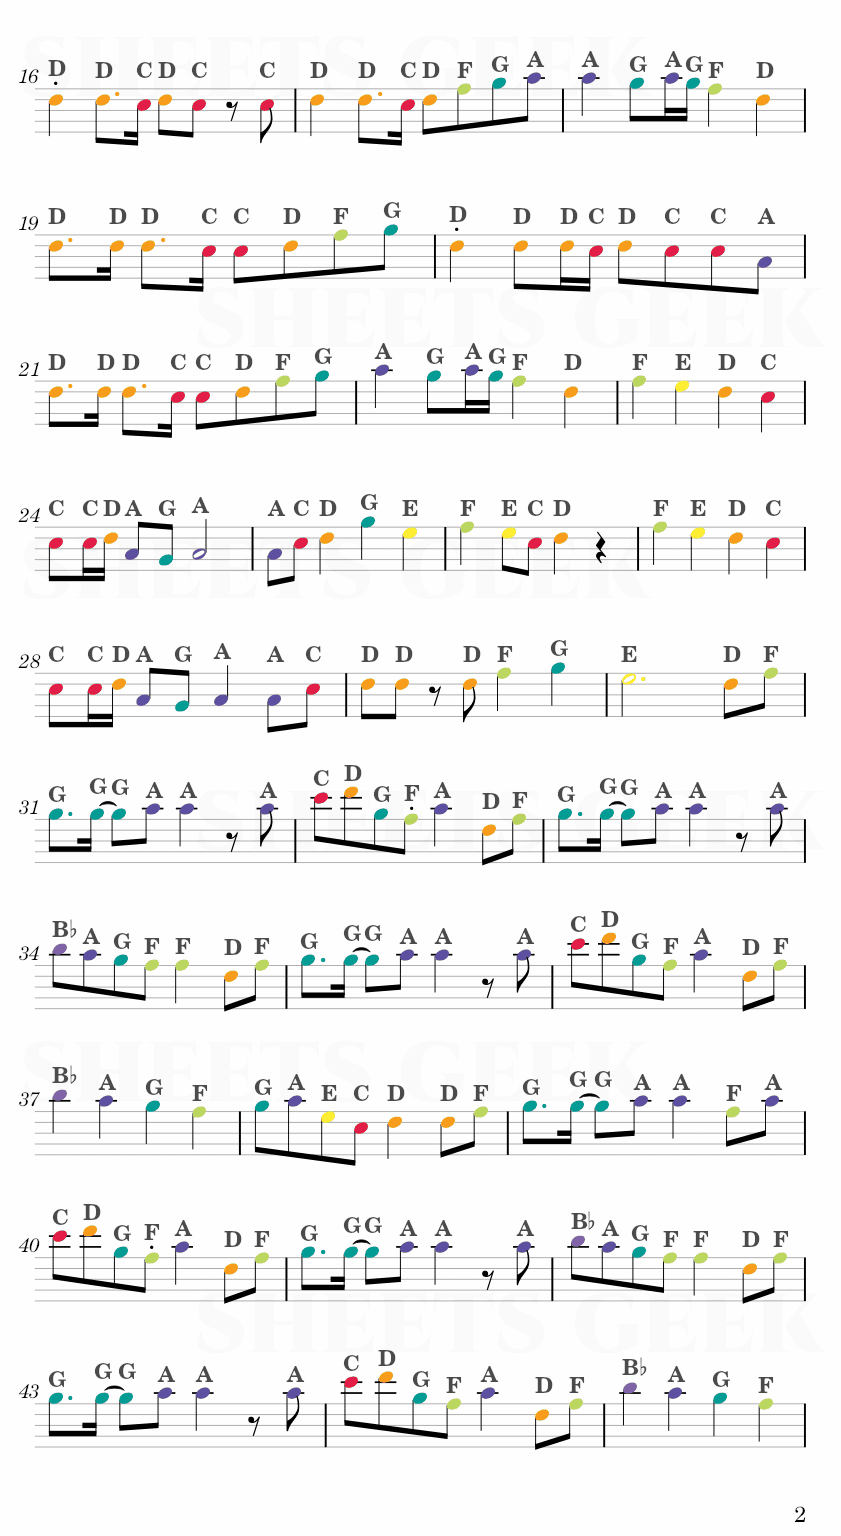 Senbonzakura - Hatsune Miku Easy Sheets Music Free for piano, keyboard, flute, violin, sax, celllo 2